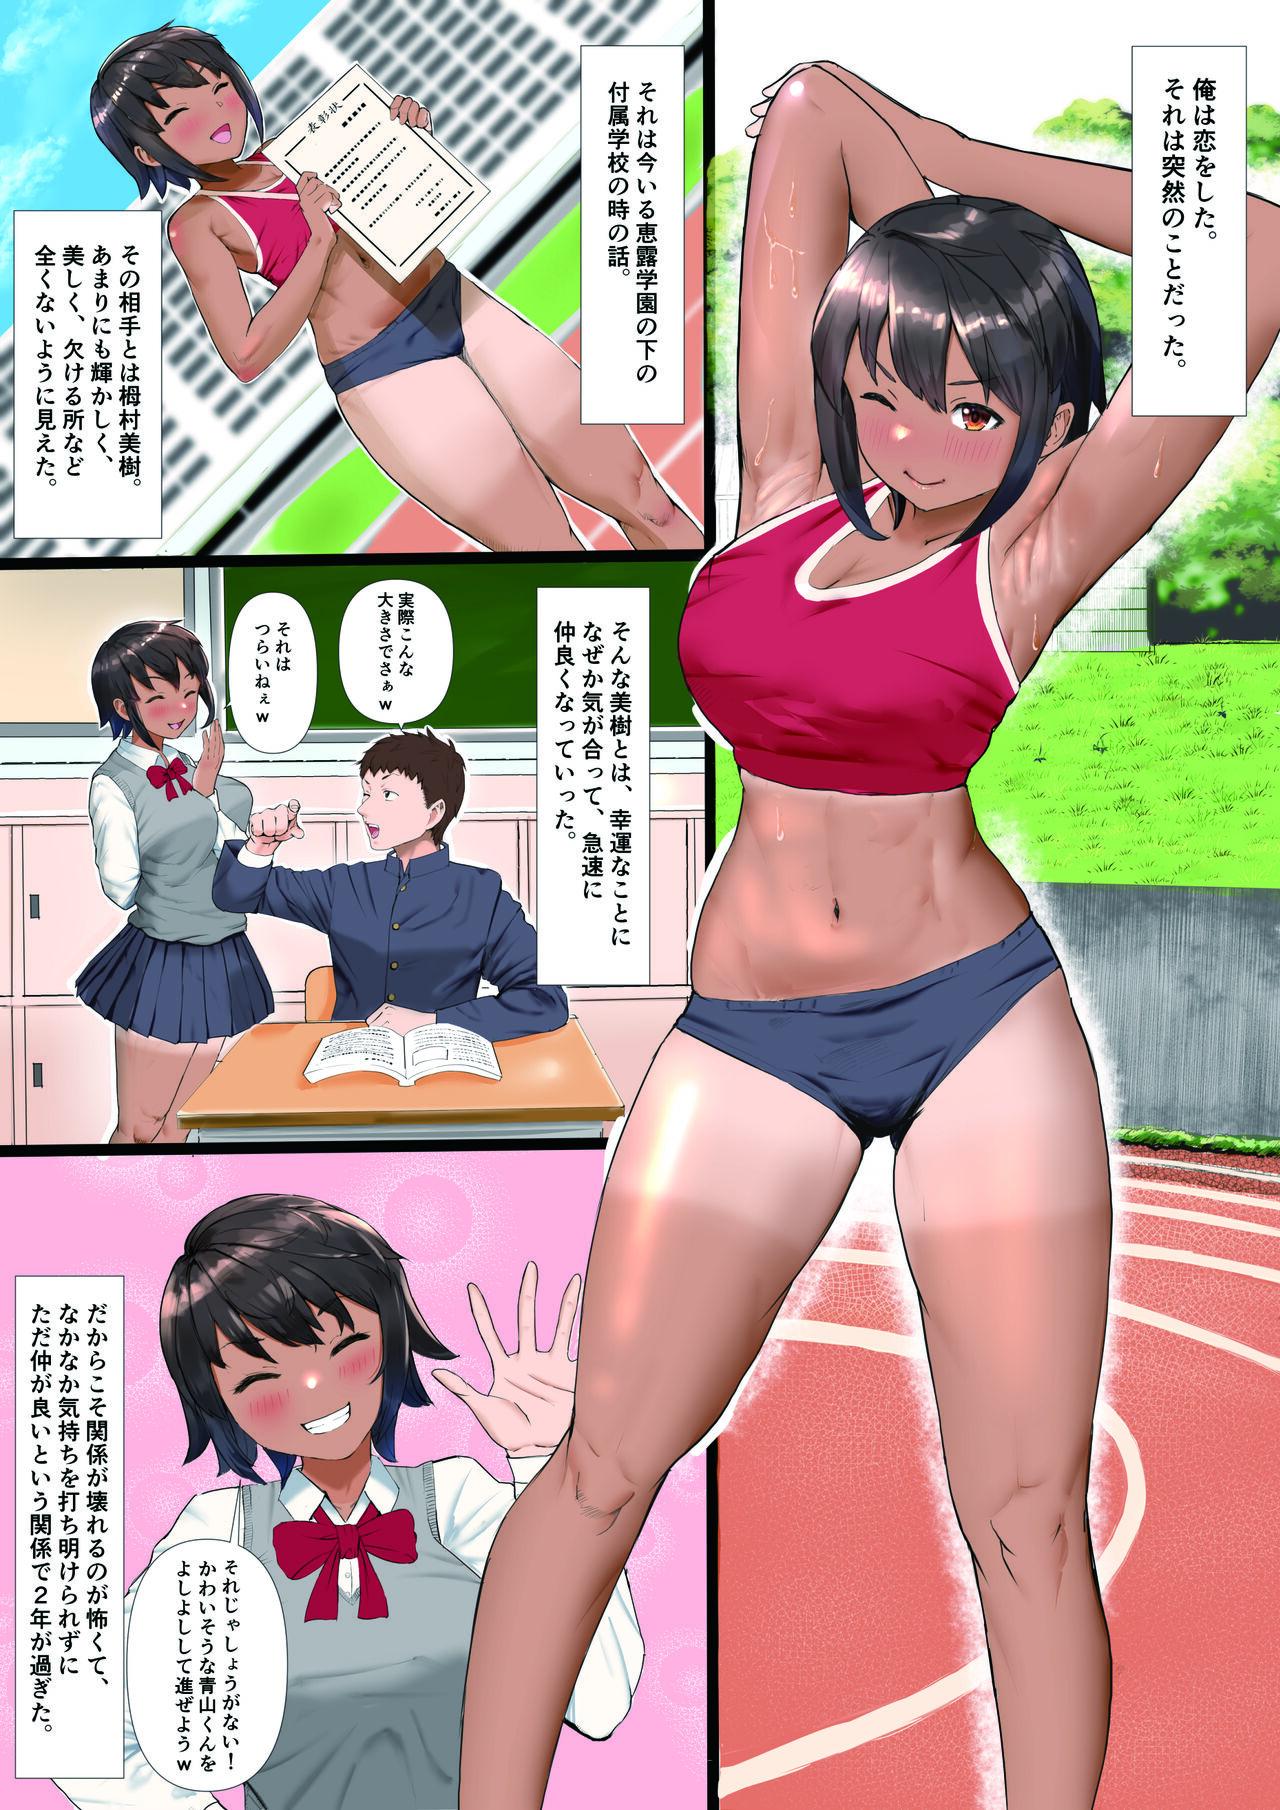 A Girlfriend From The Track And Field Club Turned Into A Senior's Woman-Rikujoubu no Kanojo ga, Senpai no Onna ni Natteita Nante. 1